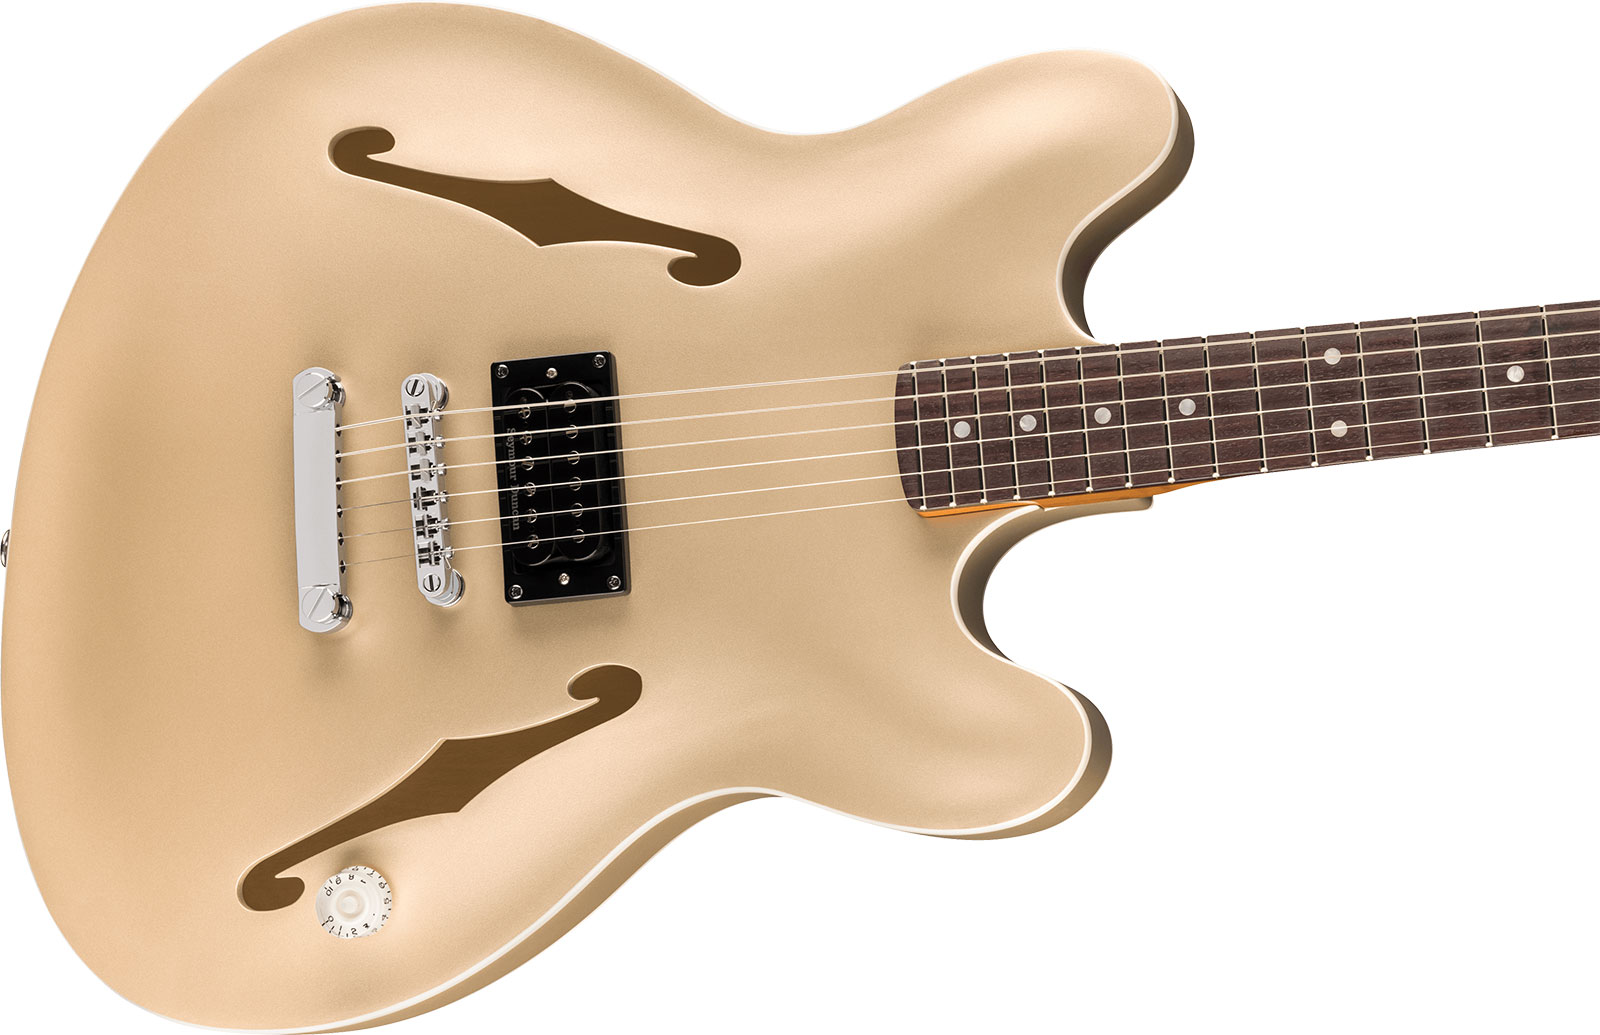 Fender Tom Delonge Starcaster 1h Seymour Duncan Ht Rw - Satin Shoreline Gold - Retro rock electric guitar - Variation 2